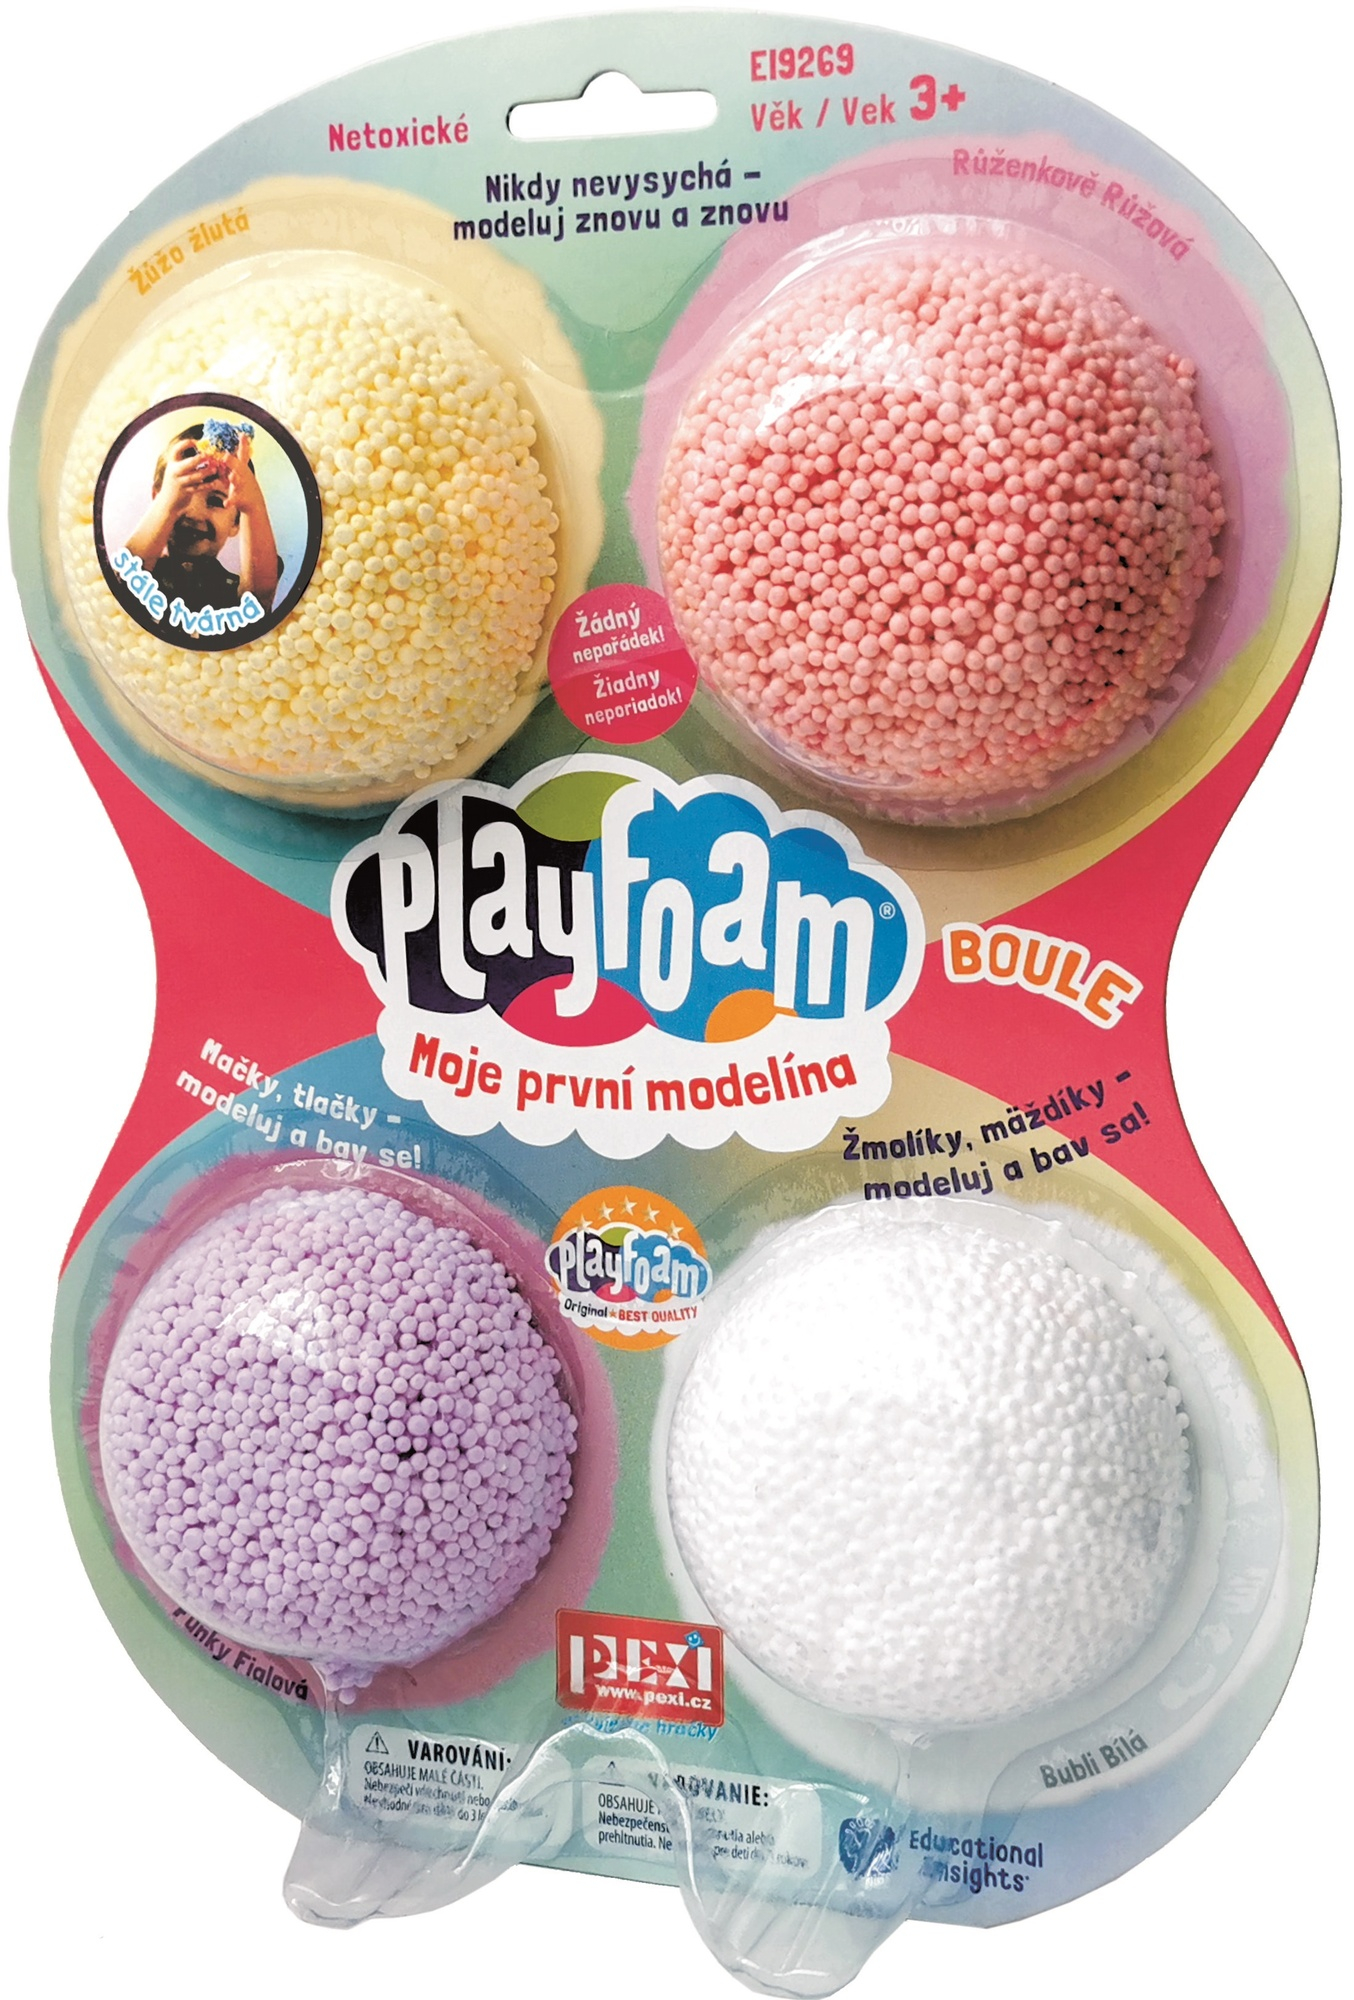 PEXI PlayFoam - Boule 4ks na kartě